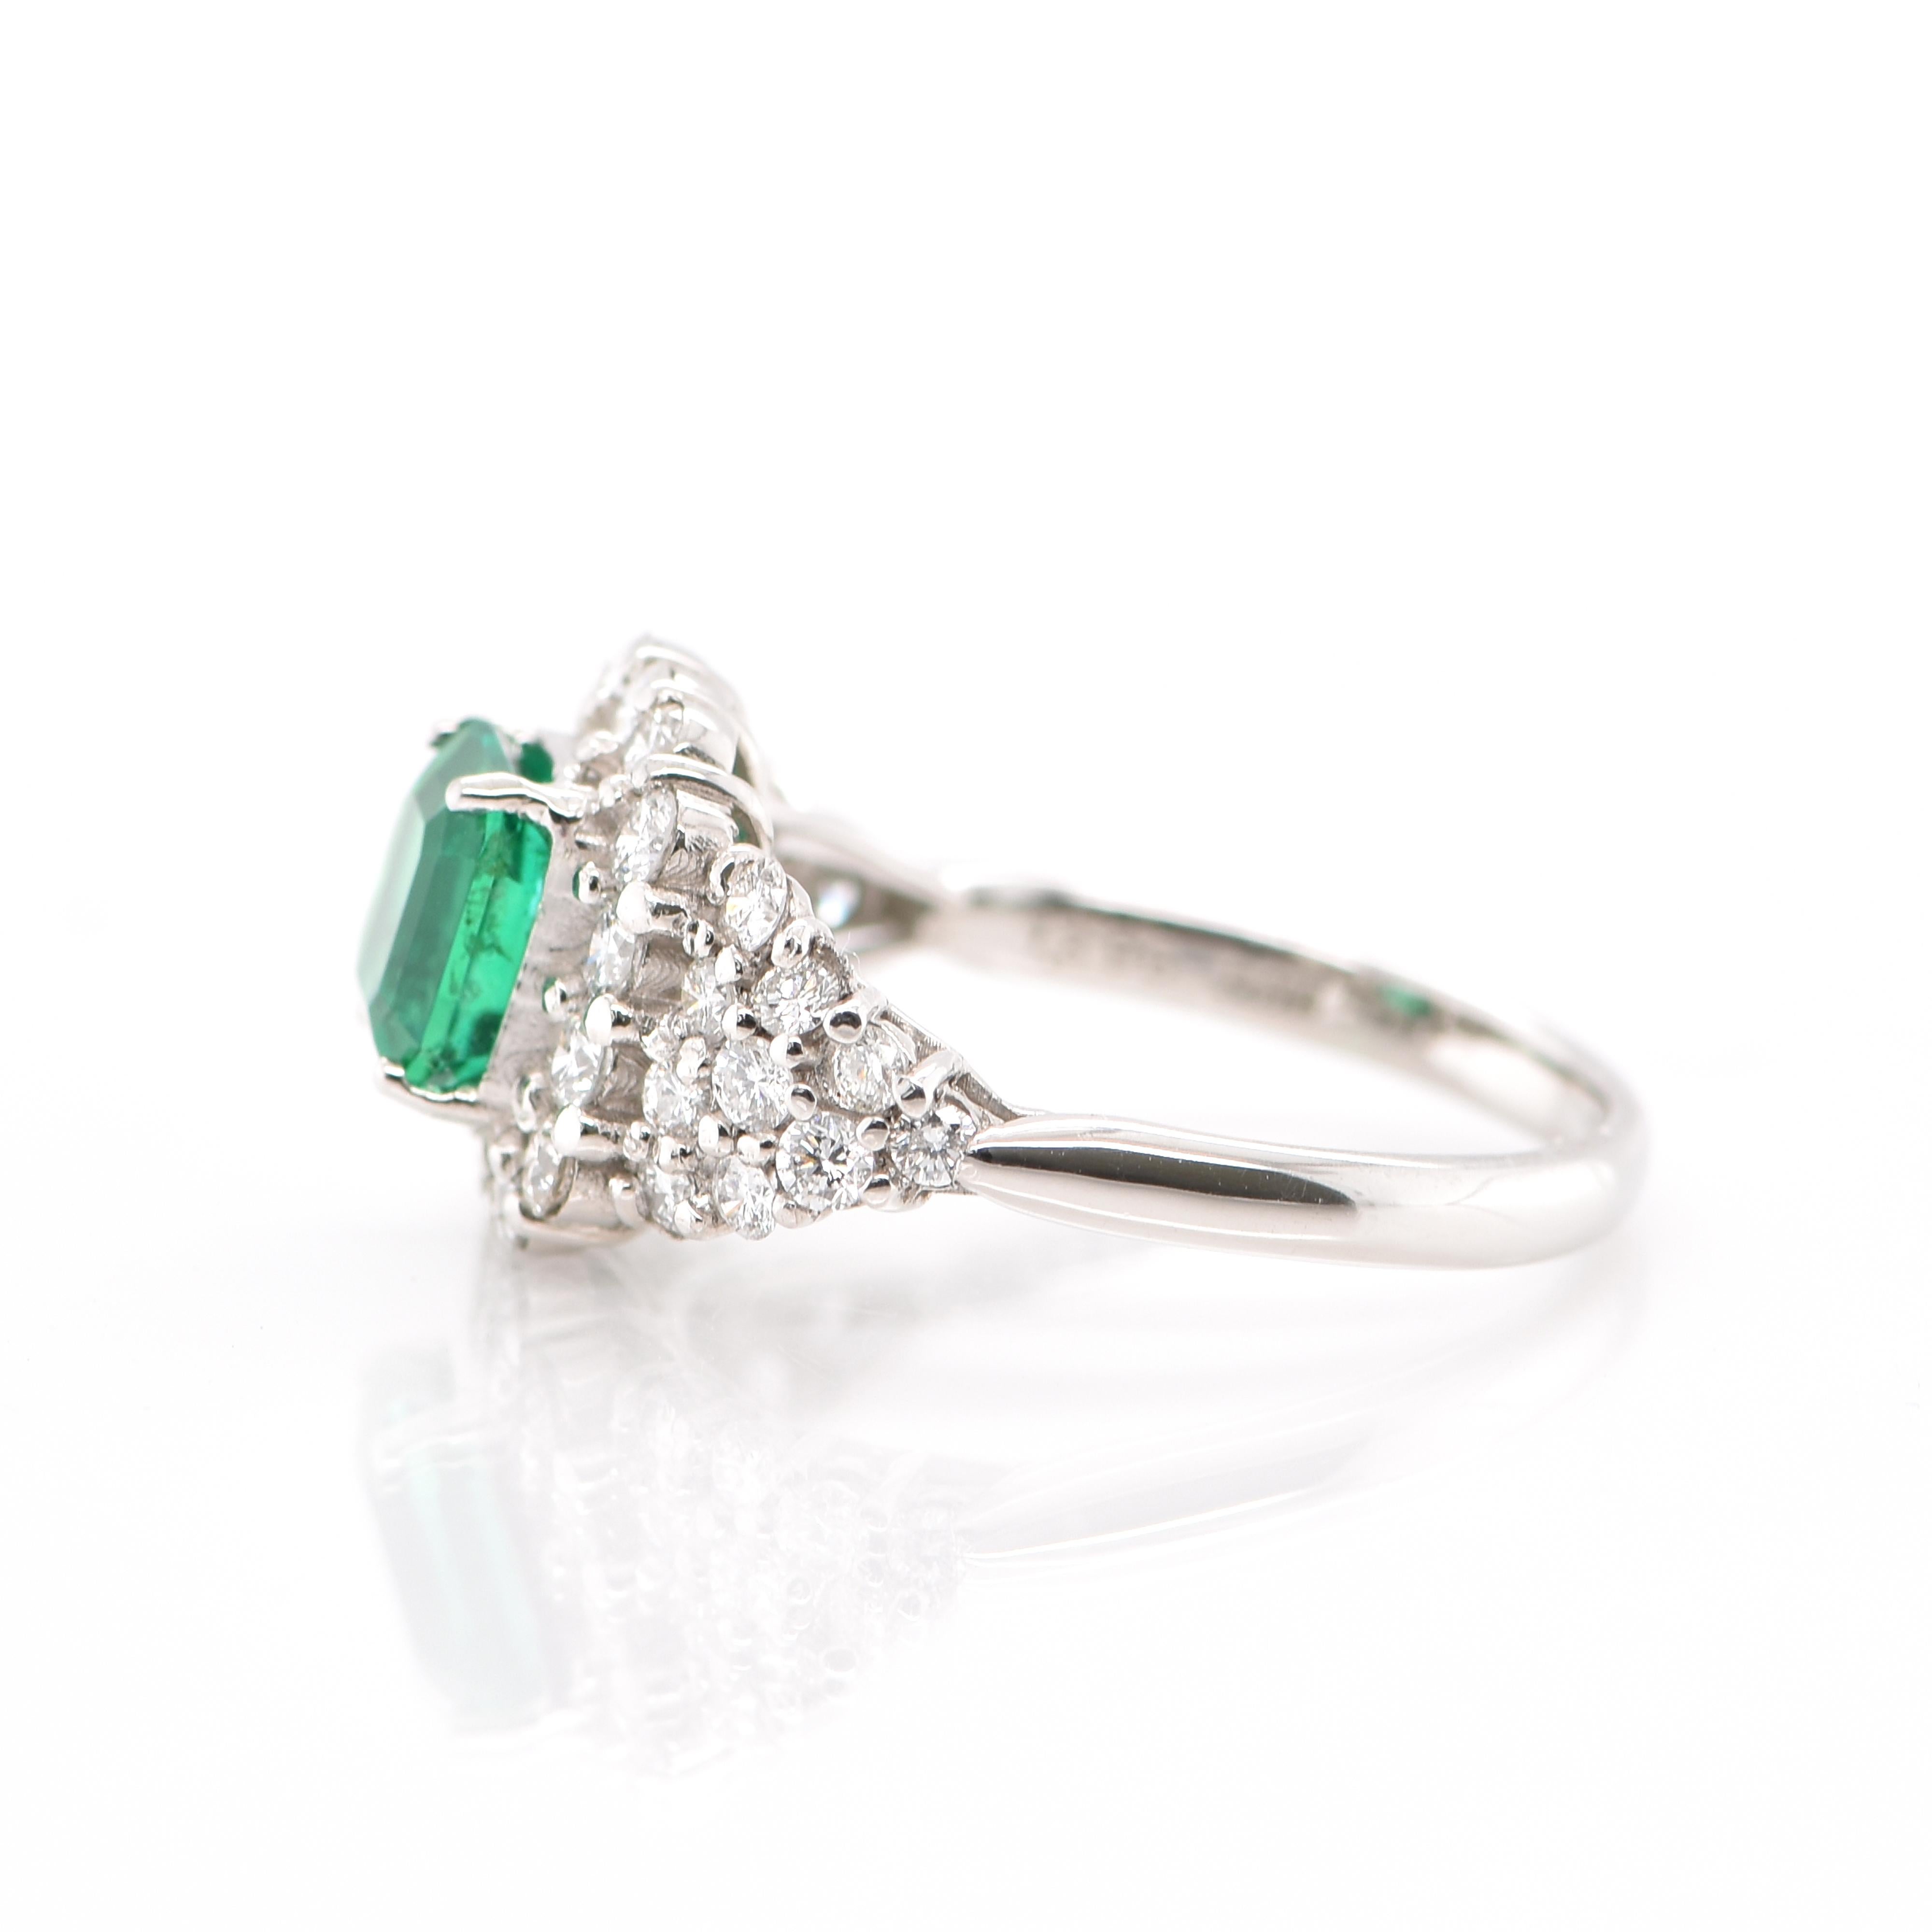 Emerald Cut GIA Certified 1.39 Carat Natural Colombian Emerald Ring Set in Platinum